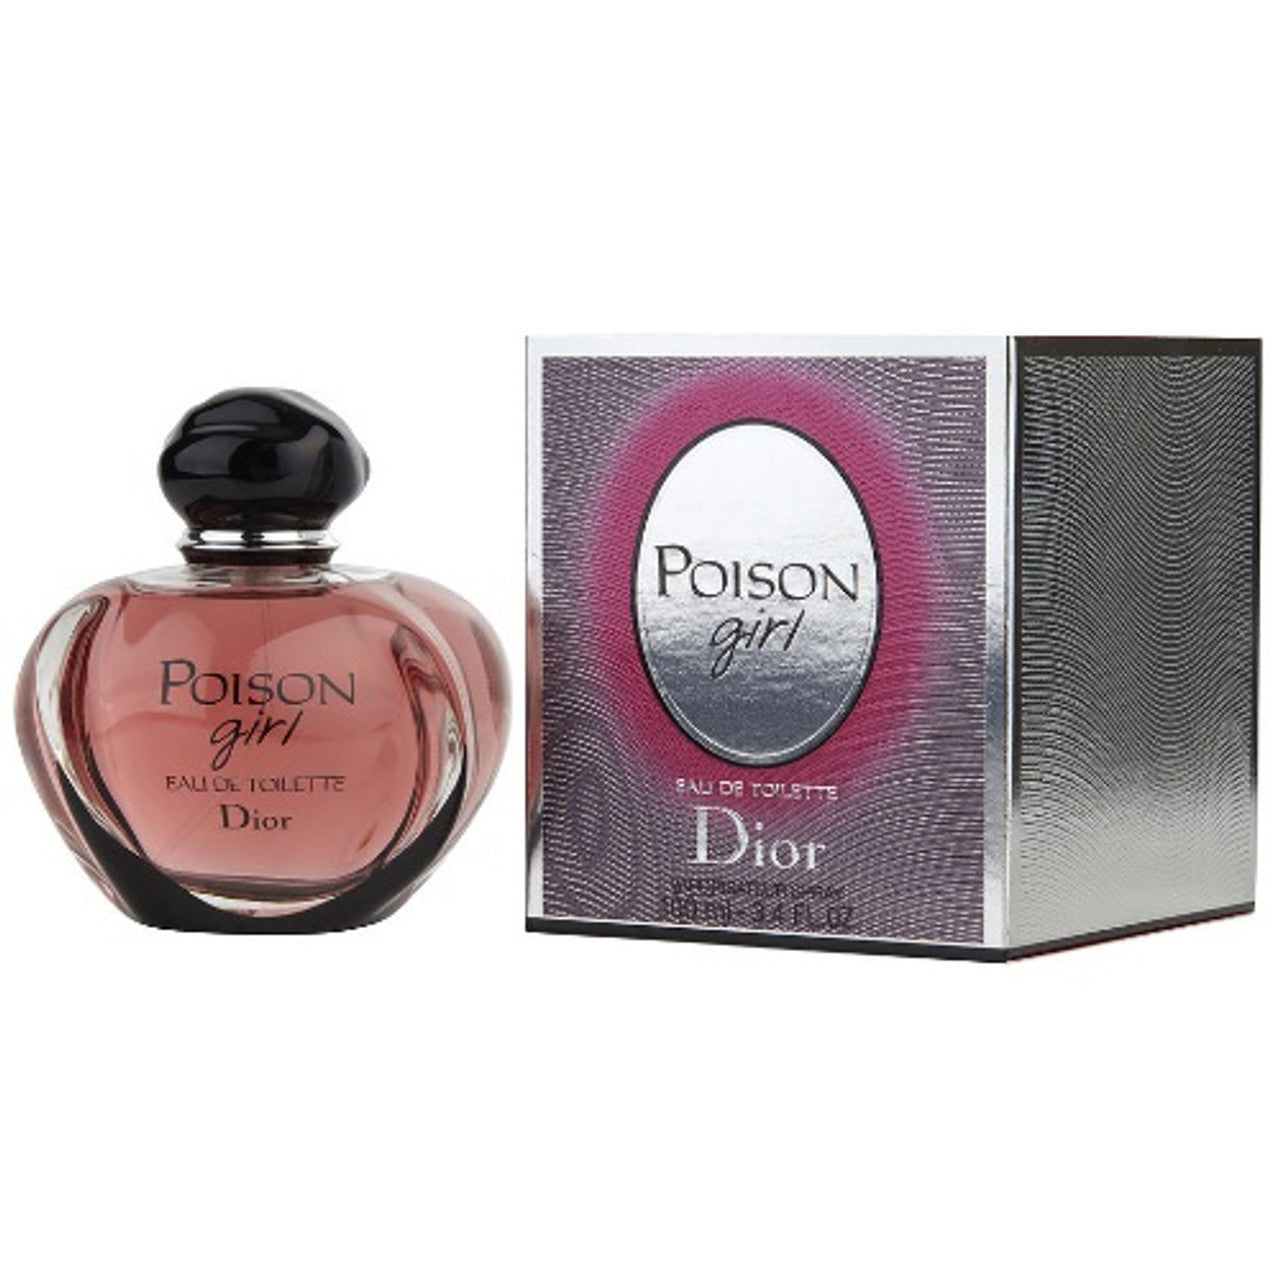 Poison Girl by Christian Dior 3.4 oz EDT Spray for Women